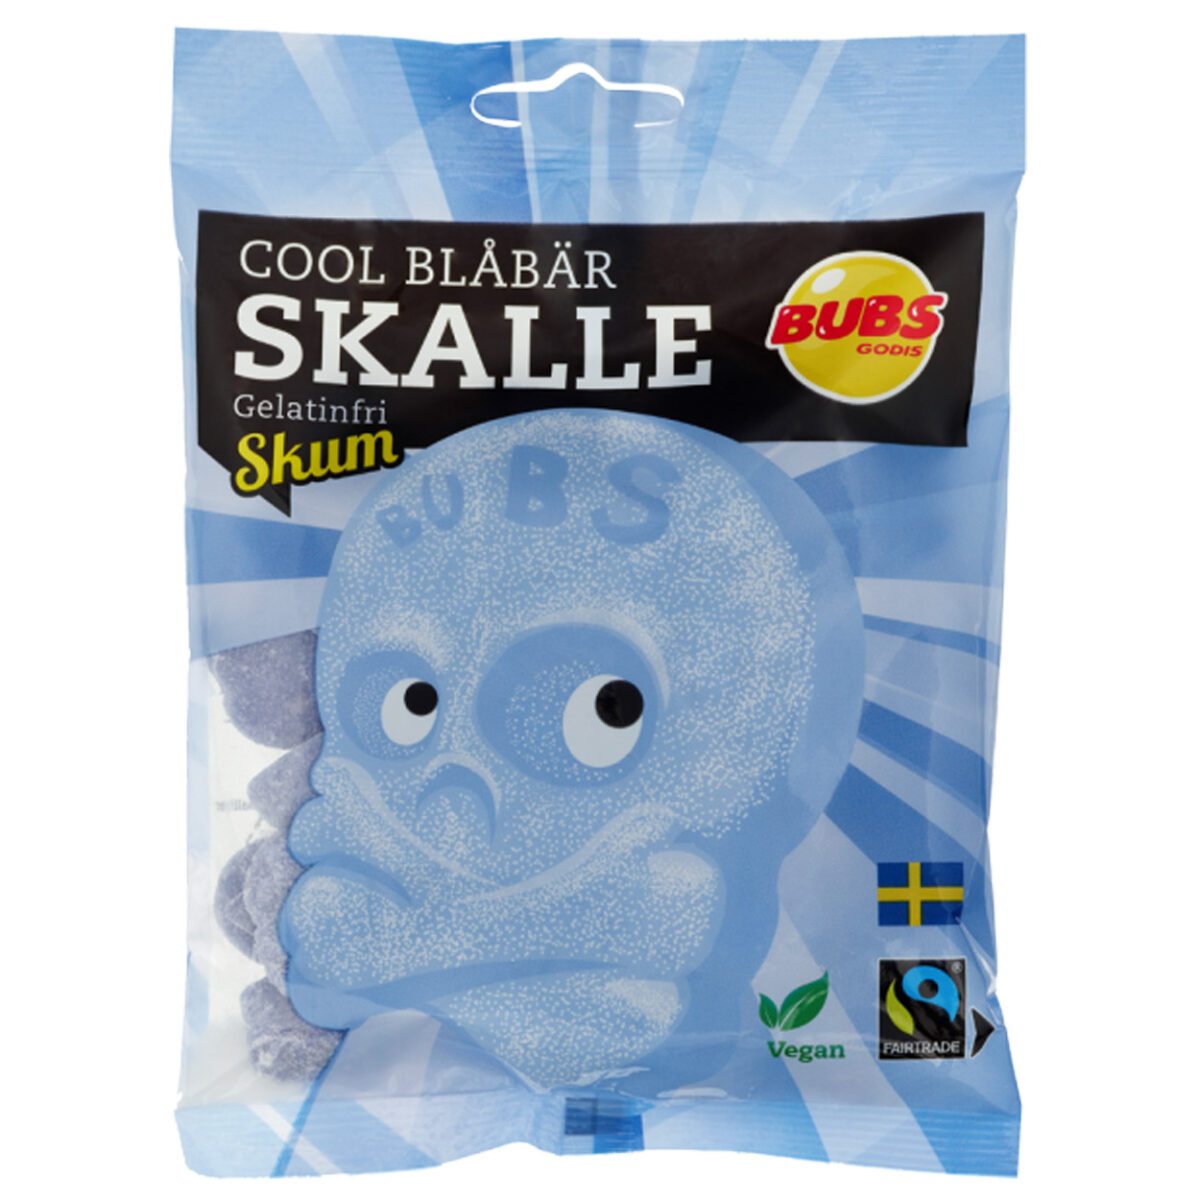 Bubs Cool Blabär Skalle Skum (90g) 1